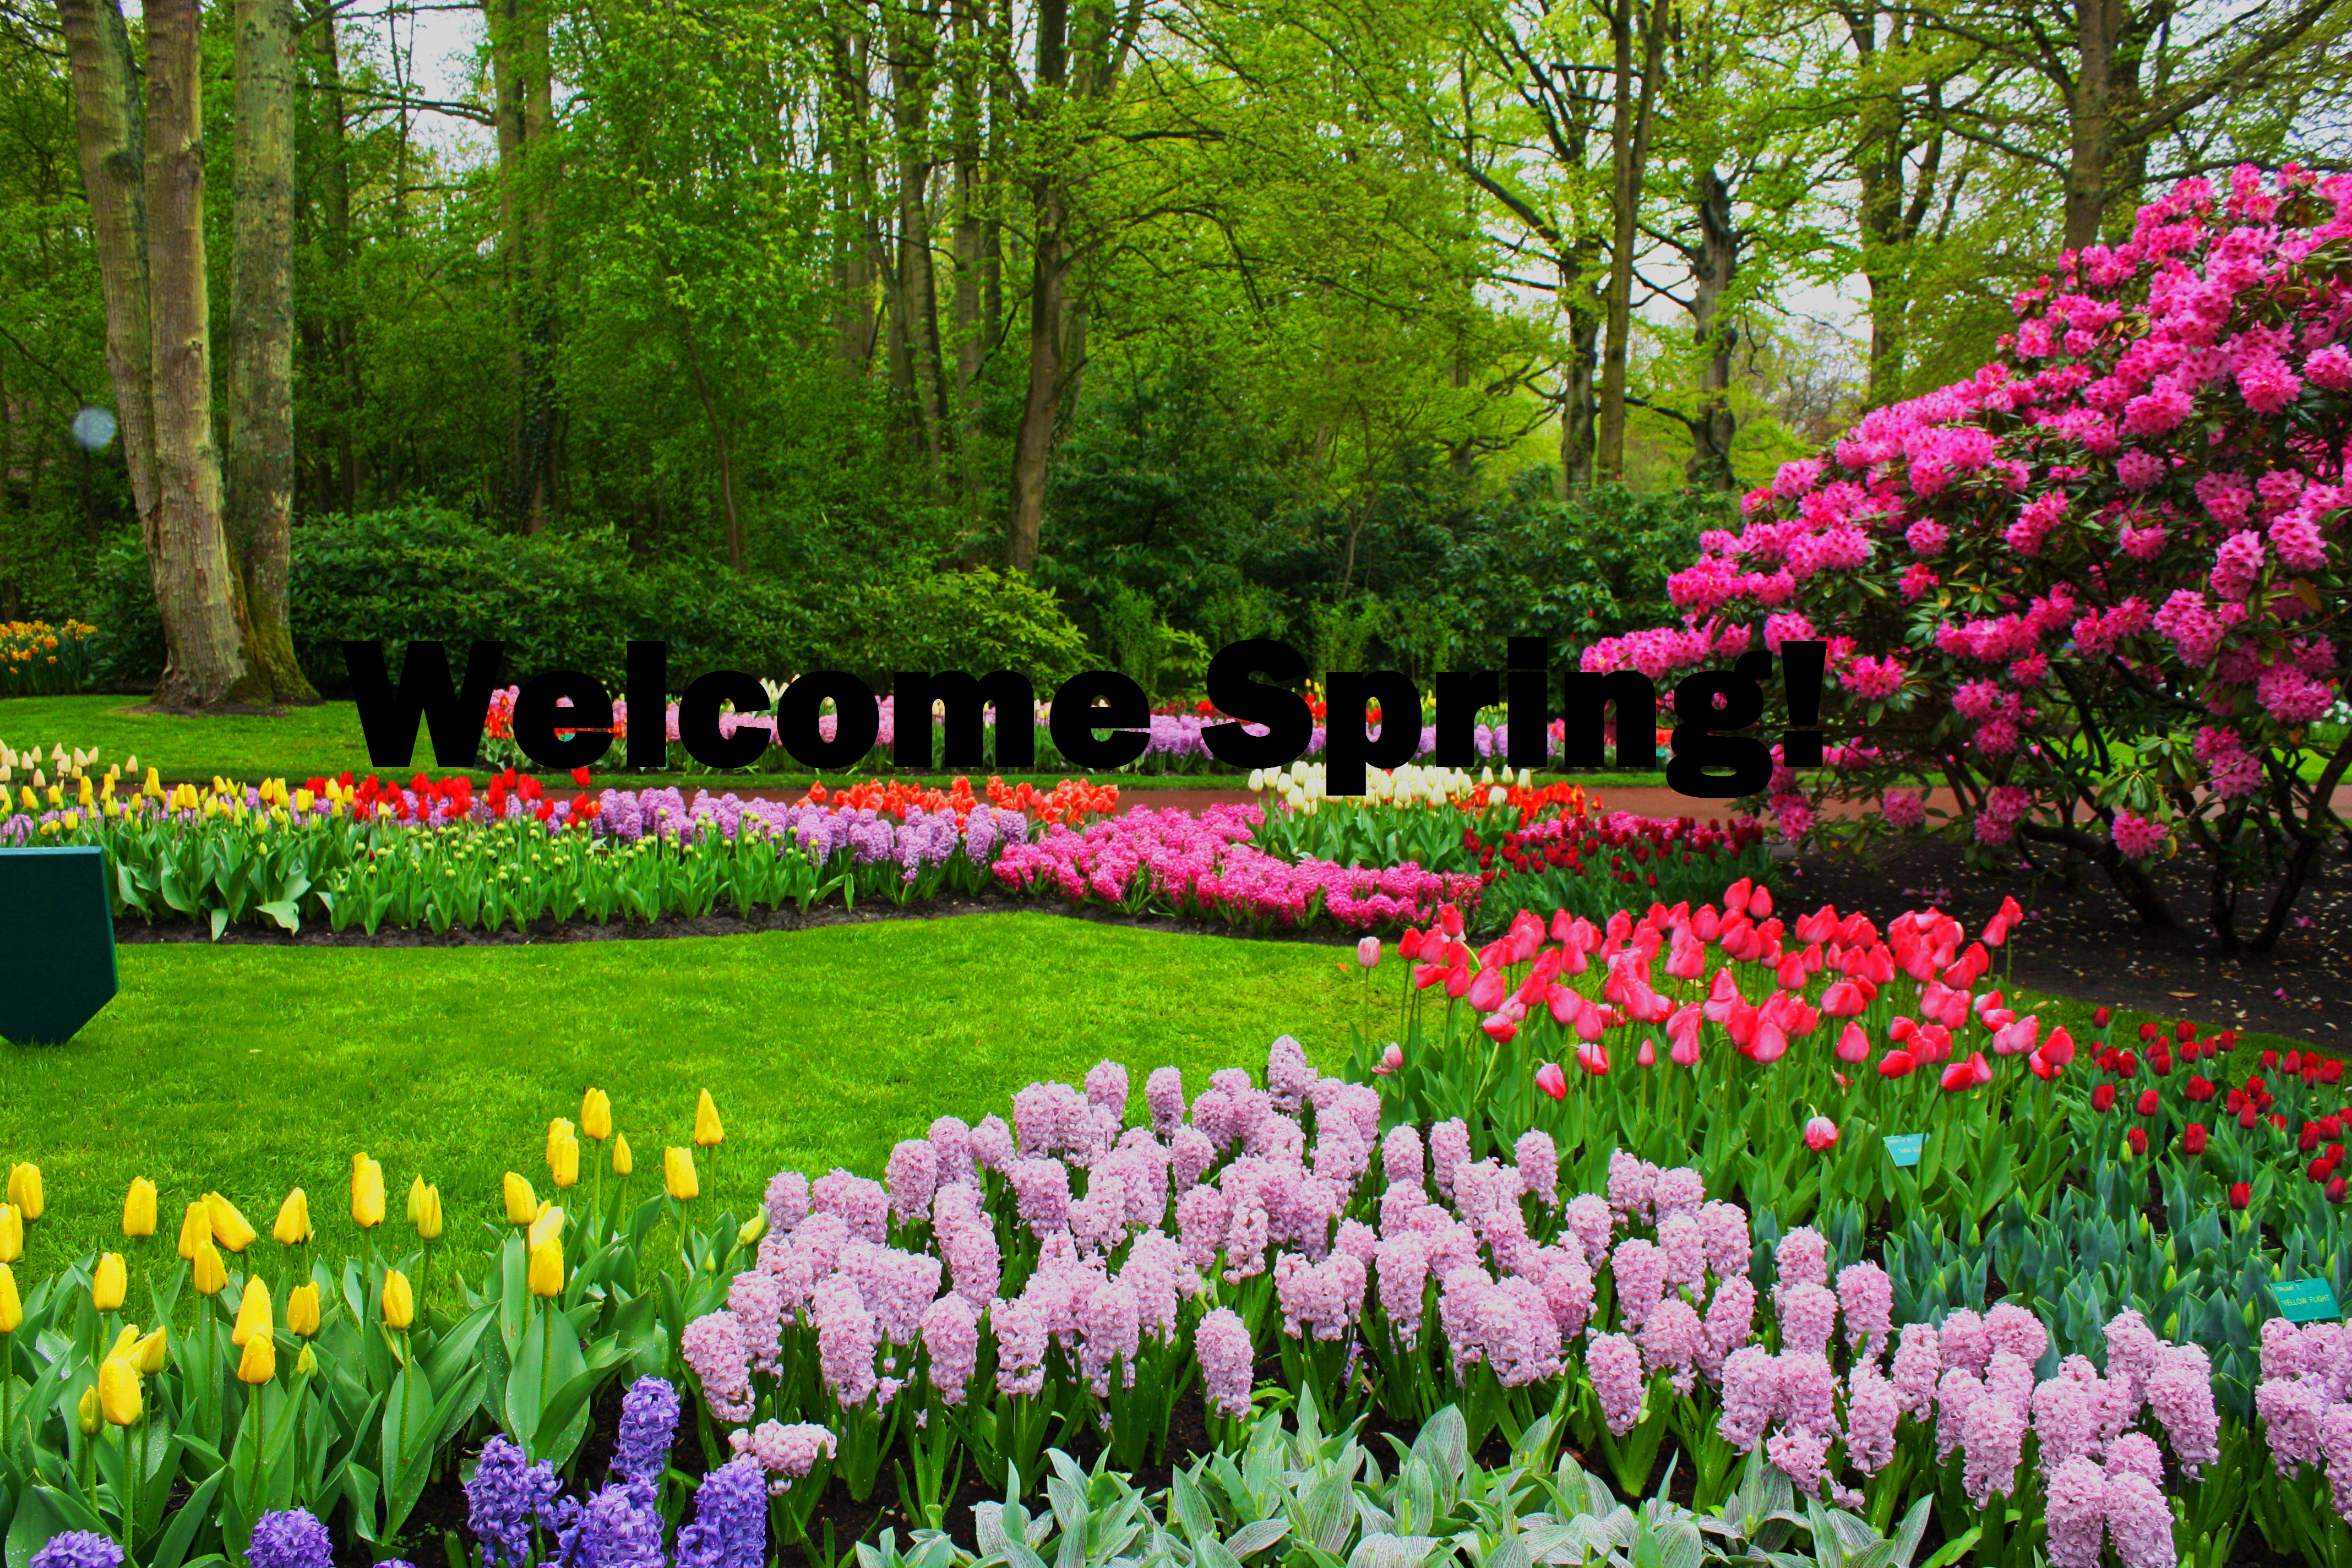 Wele Spring HD Wallpaper Image